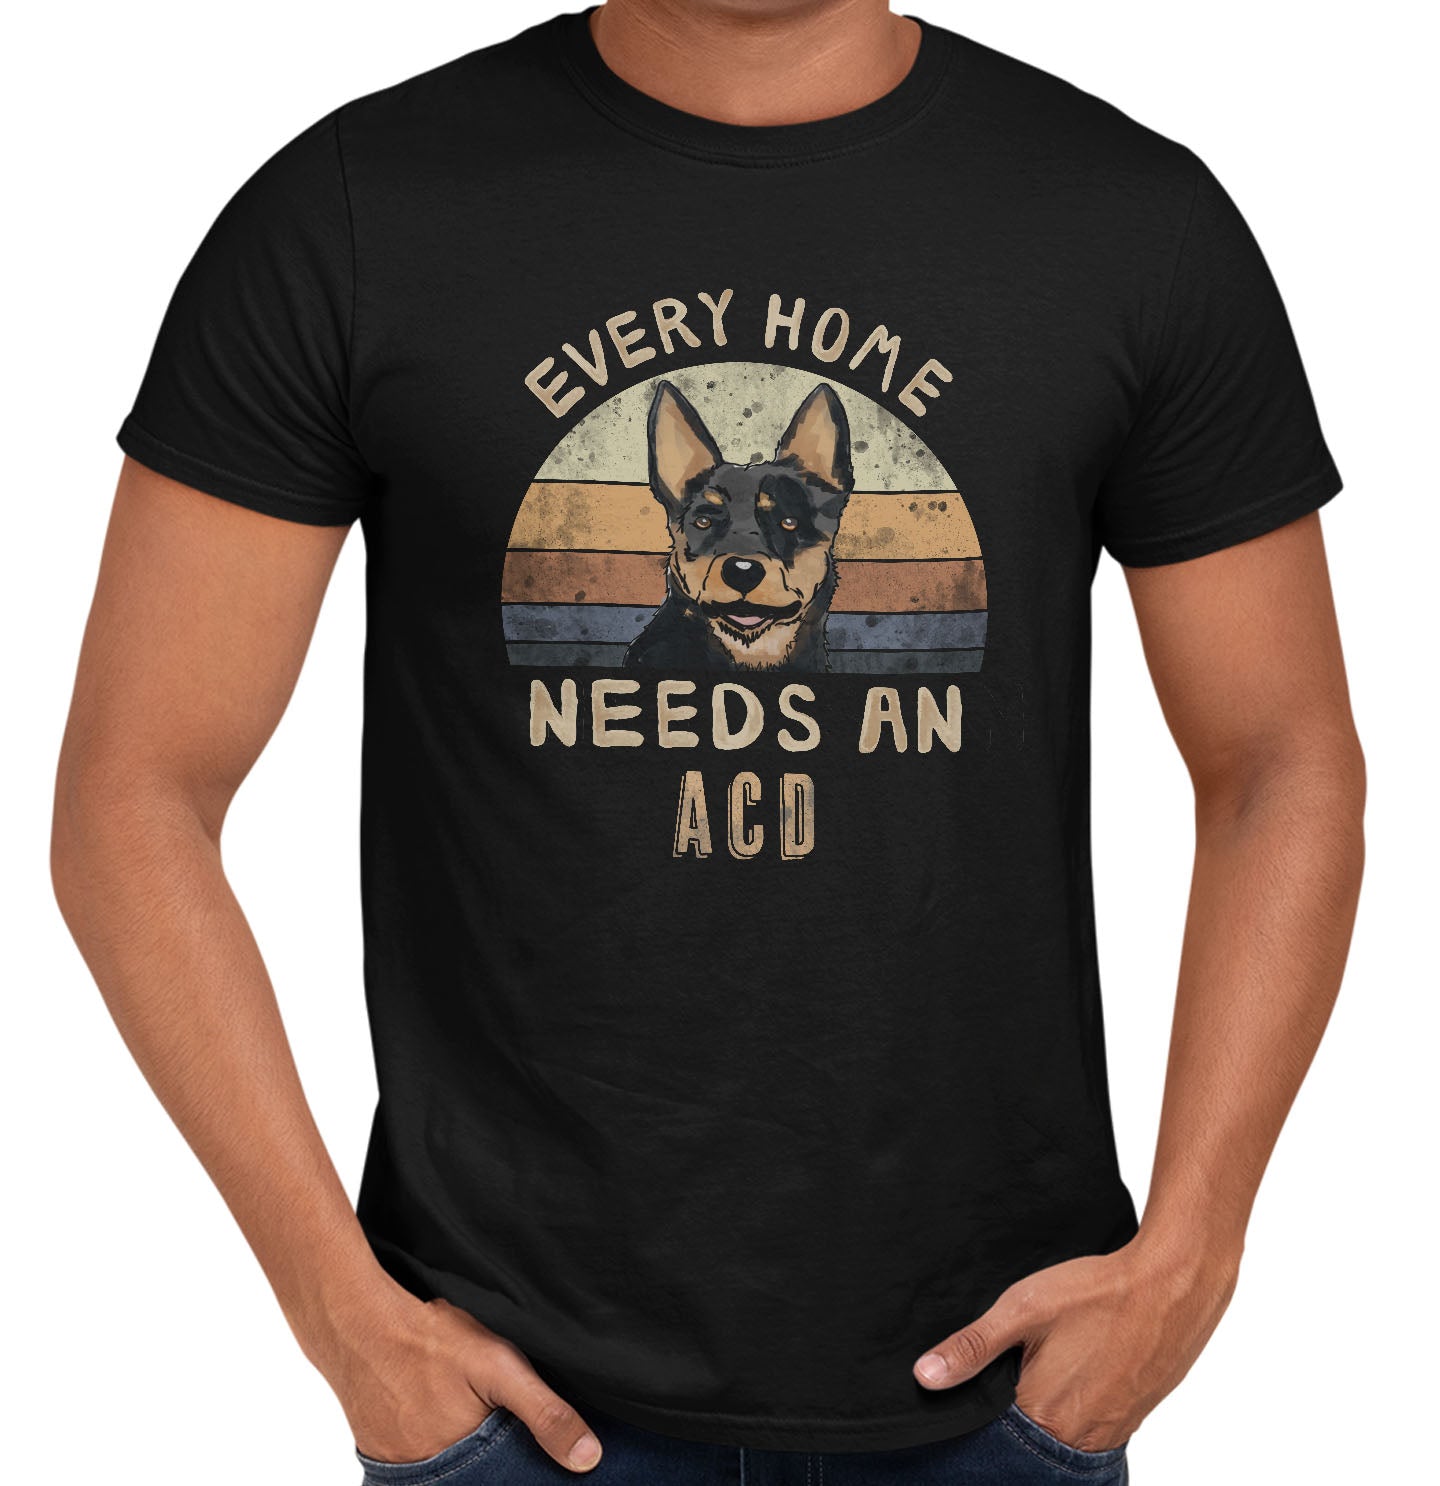 Every Home Needs a Australian Cattle Dog - Adult Unisex T-Shirt